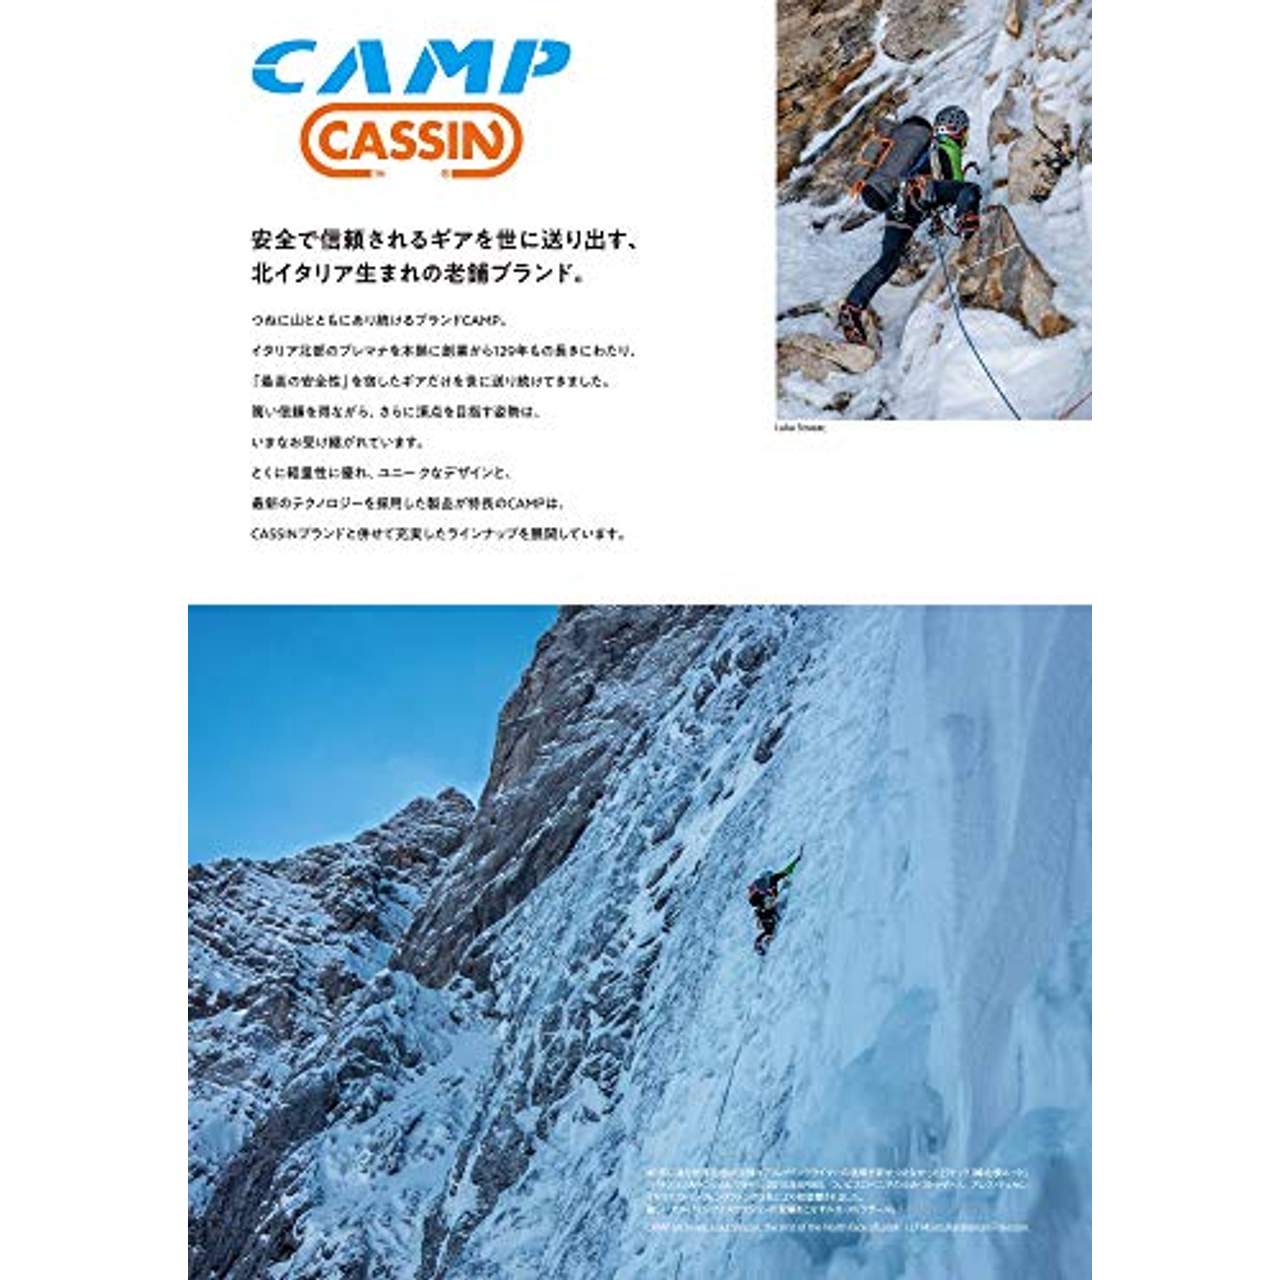 CAMP Titan Helm Grey Kopfumfang 54-62cm 2020 Snowboardhelm